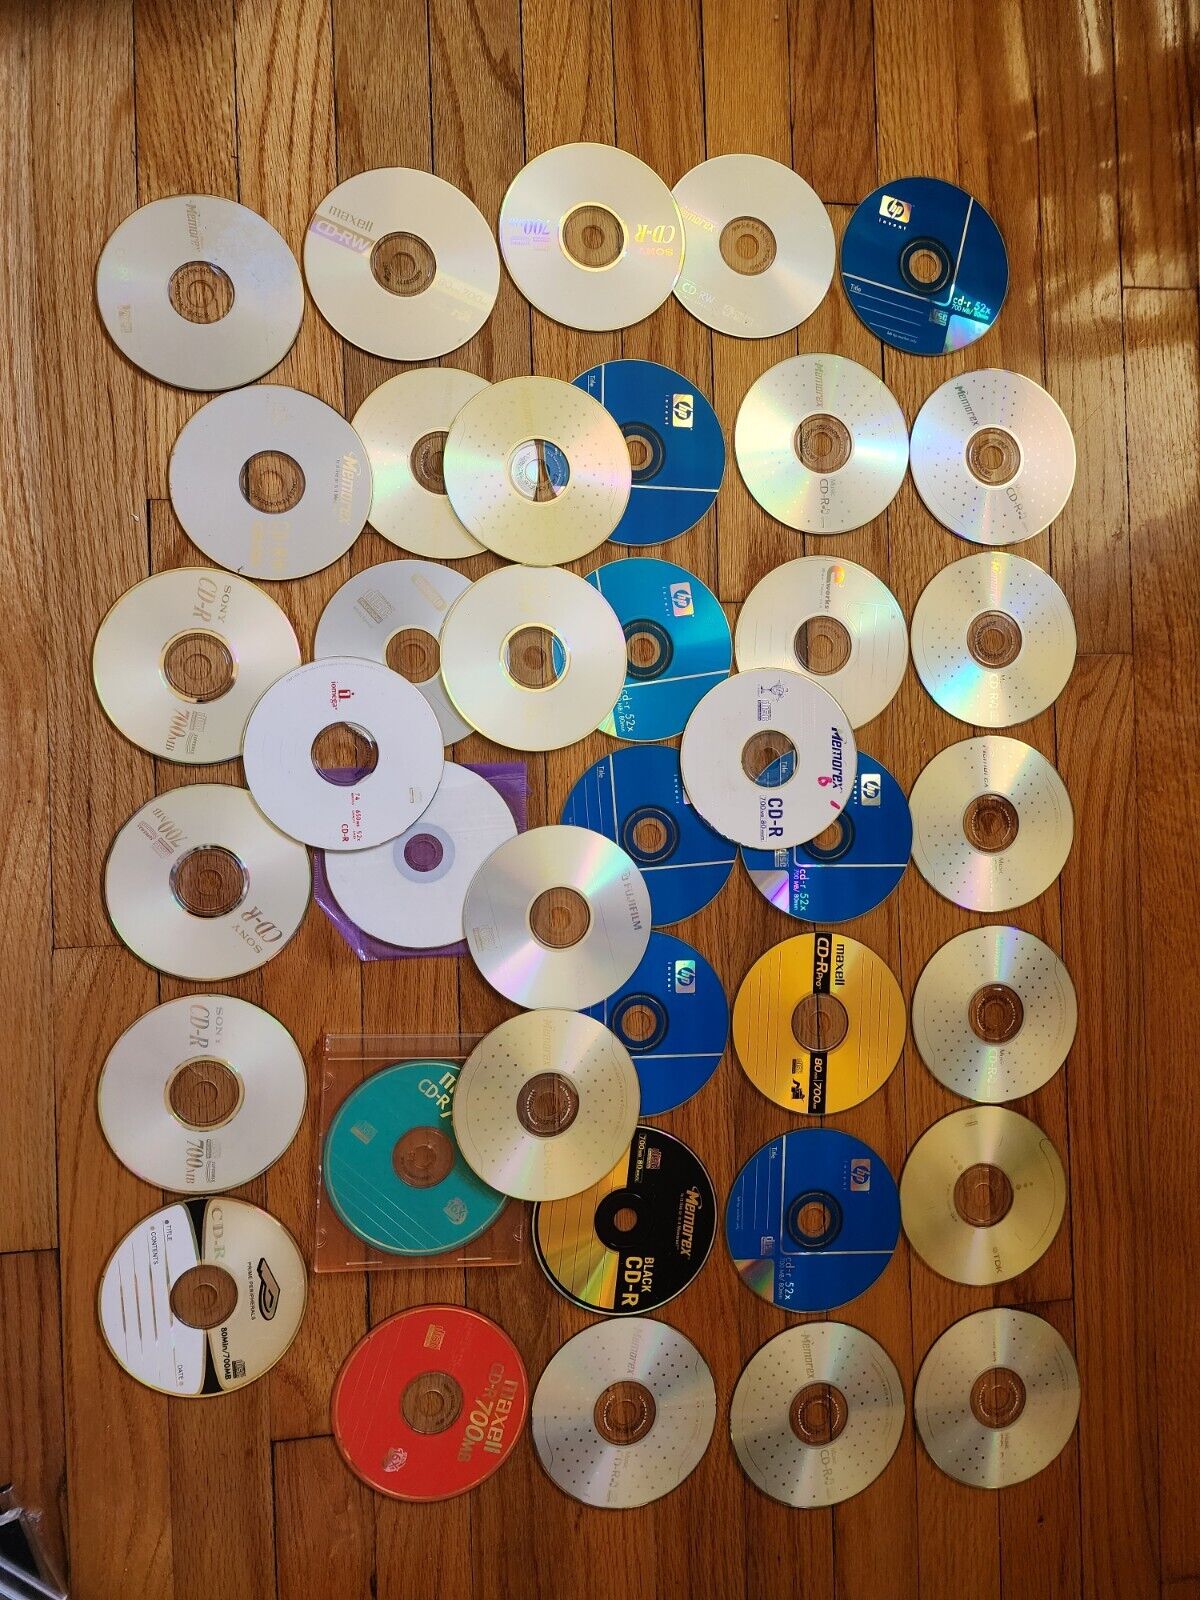 Lot of 39 CD-R discs mixed brands